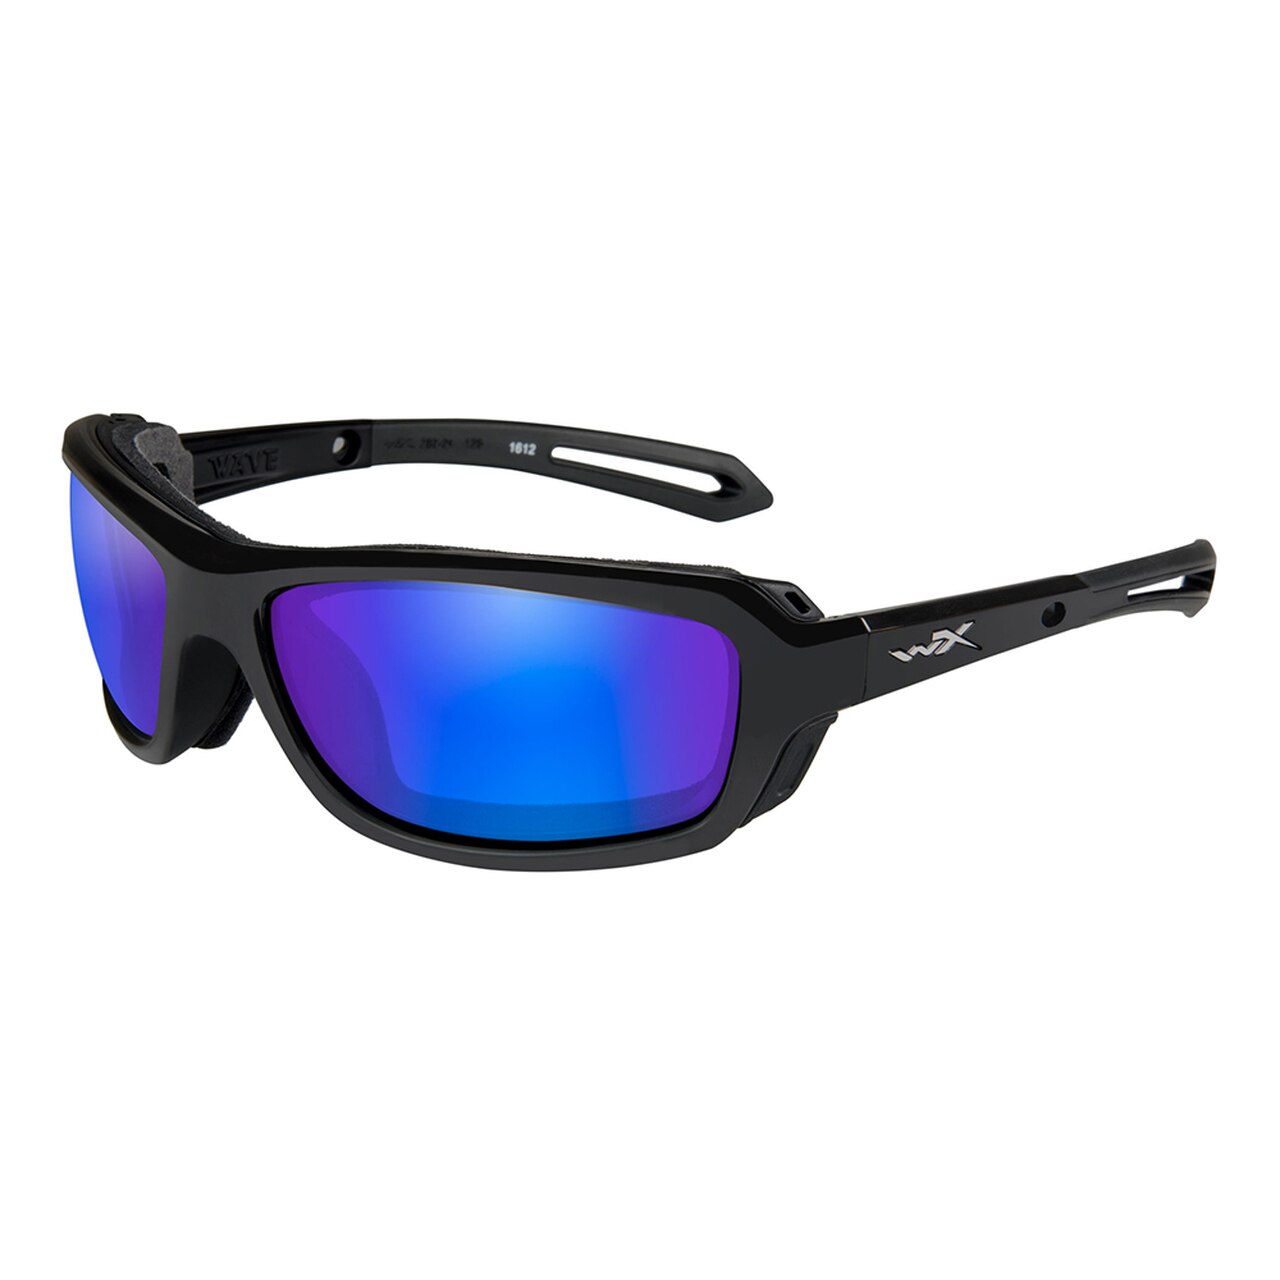 Wiley X Wave Sunglasses Polarised Blue Mirror Gloss Black Frame Tactical Distributors Ltd New Zealand